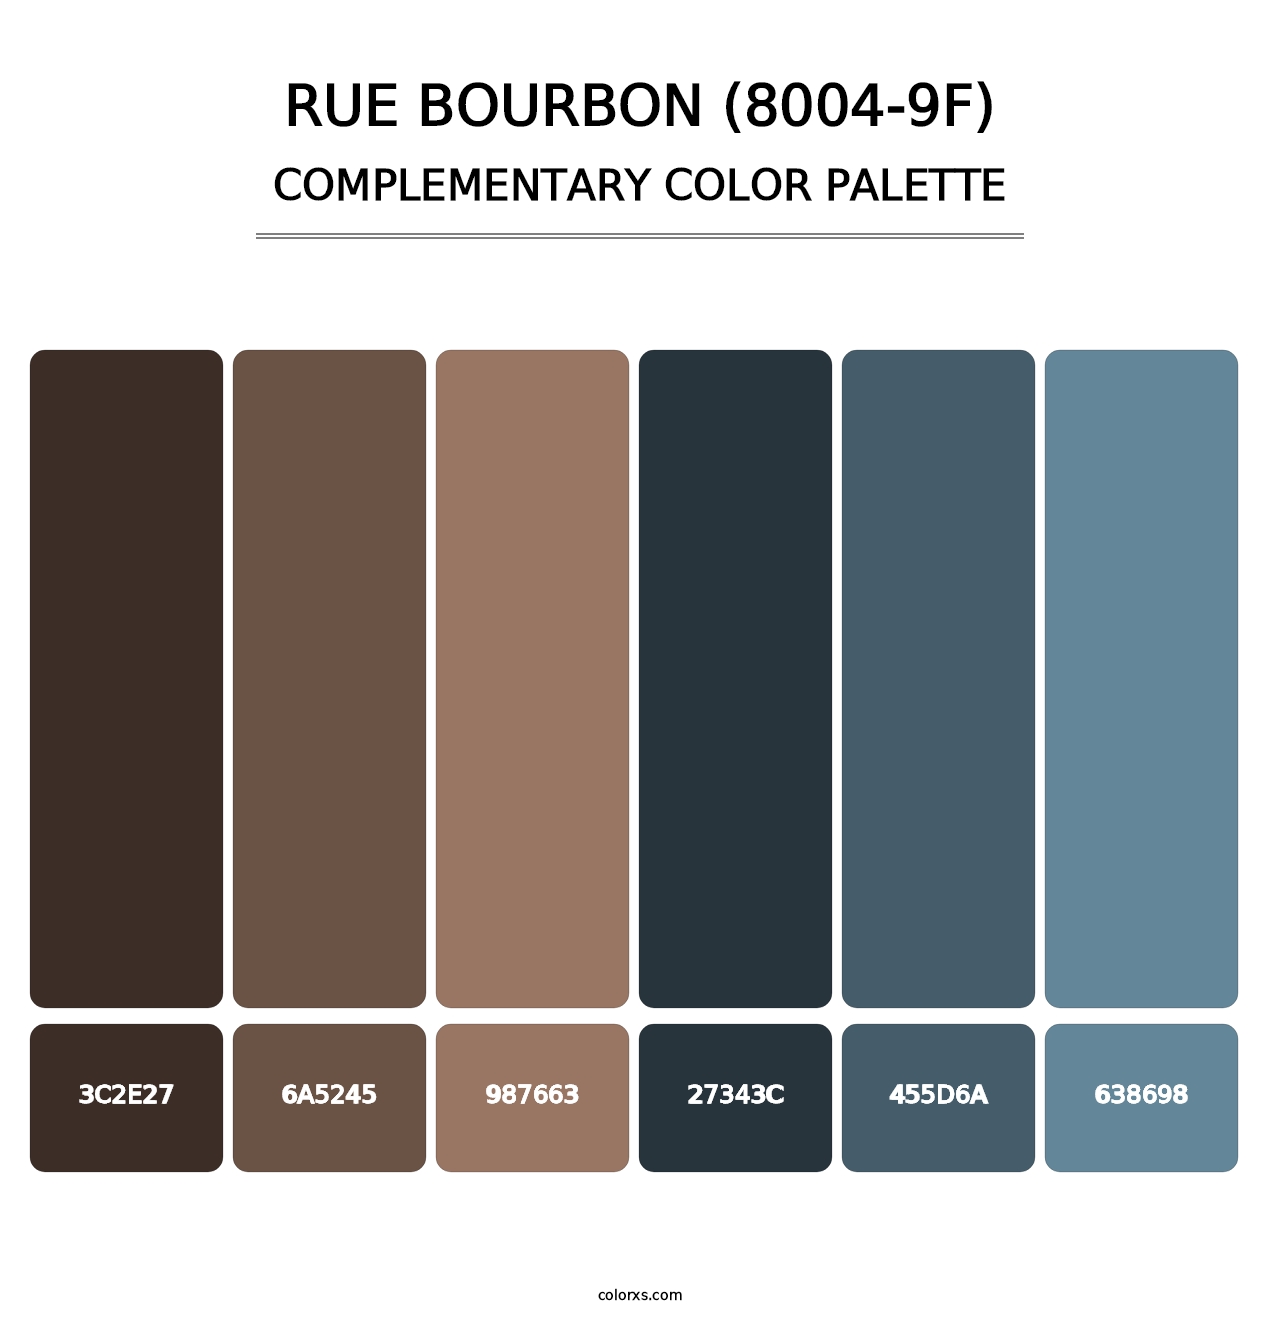 Rue Bourbon (8004-9F) - Complementary Color Palette